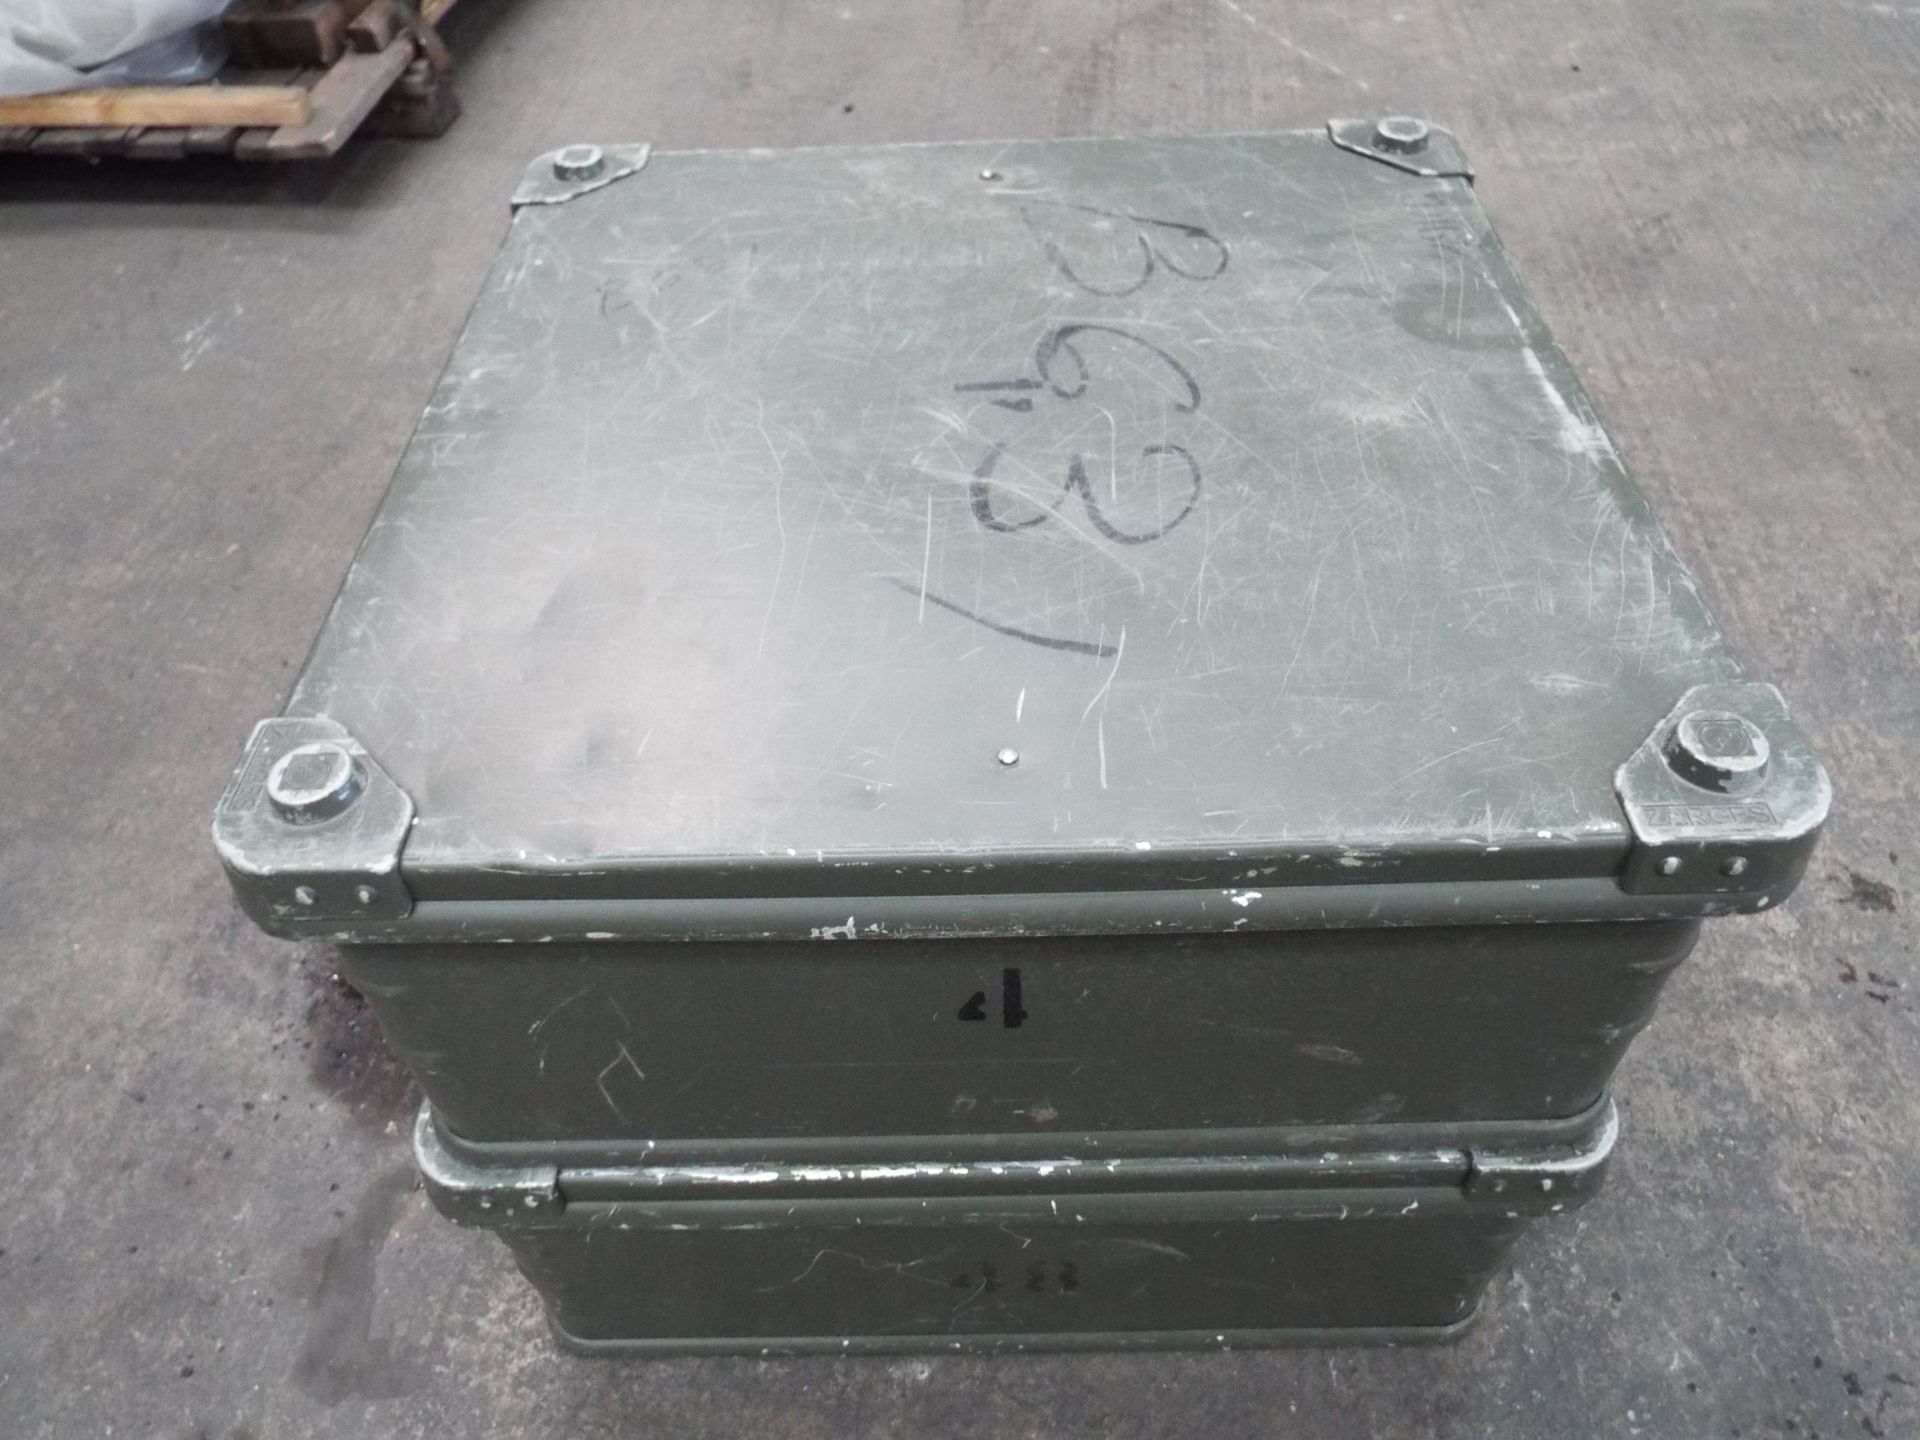 2 x Heavy Duty Zarges Aluminium Cases - Image 4 of 5